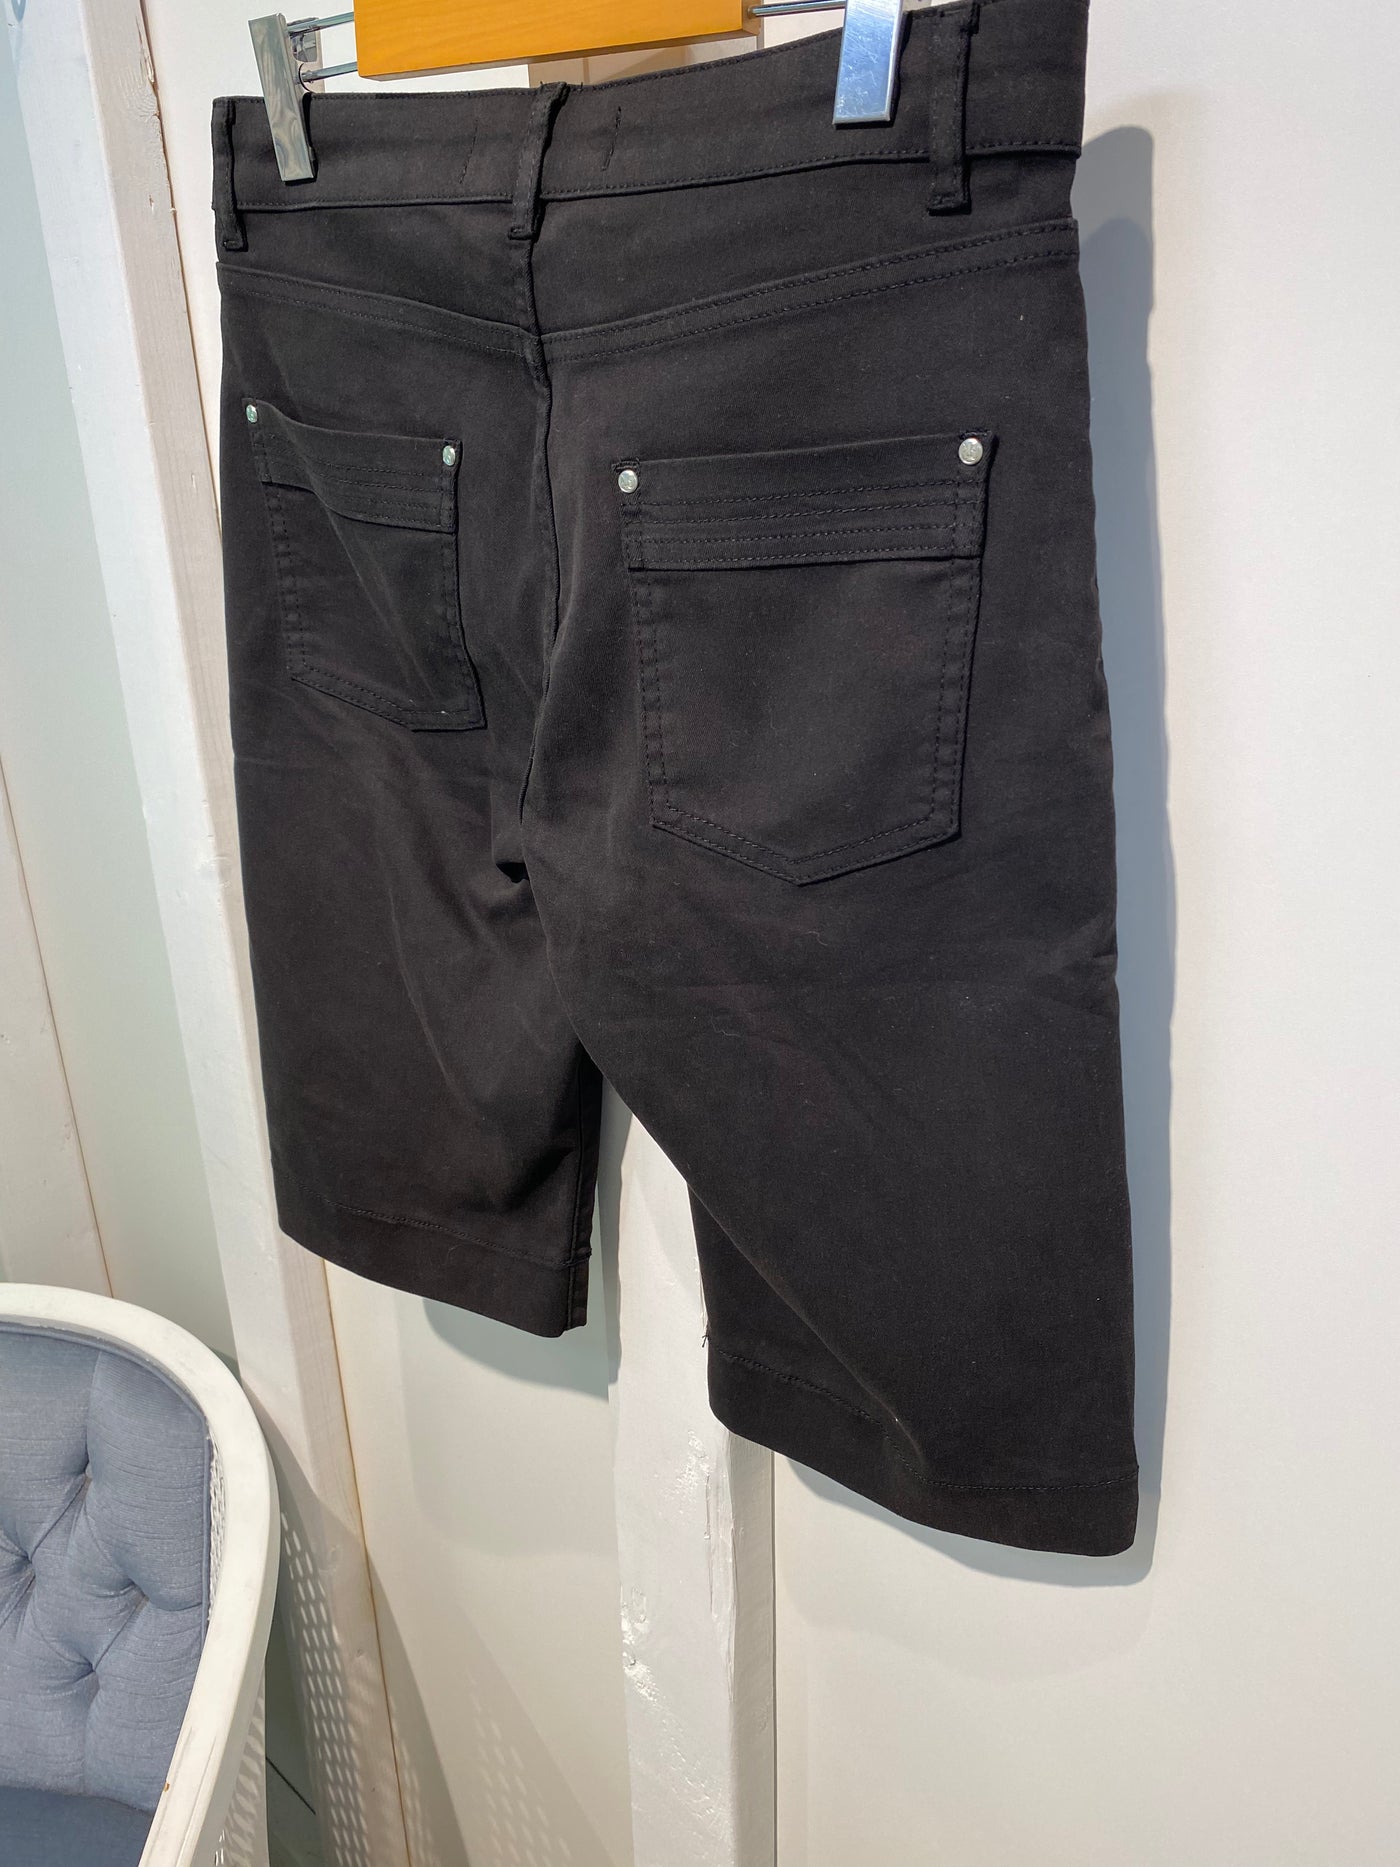 Stretchy Black Capri Shorts